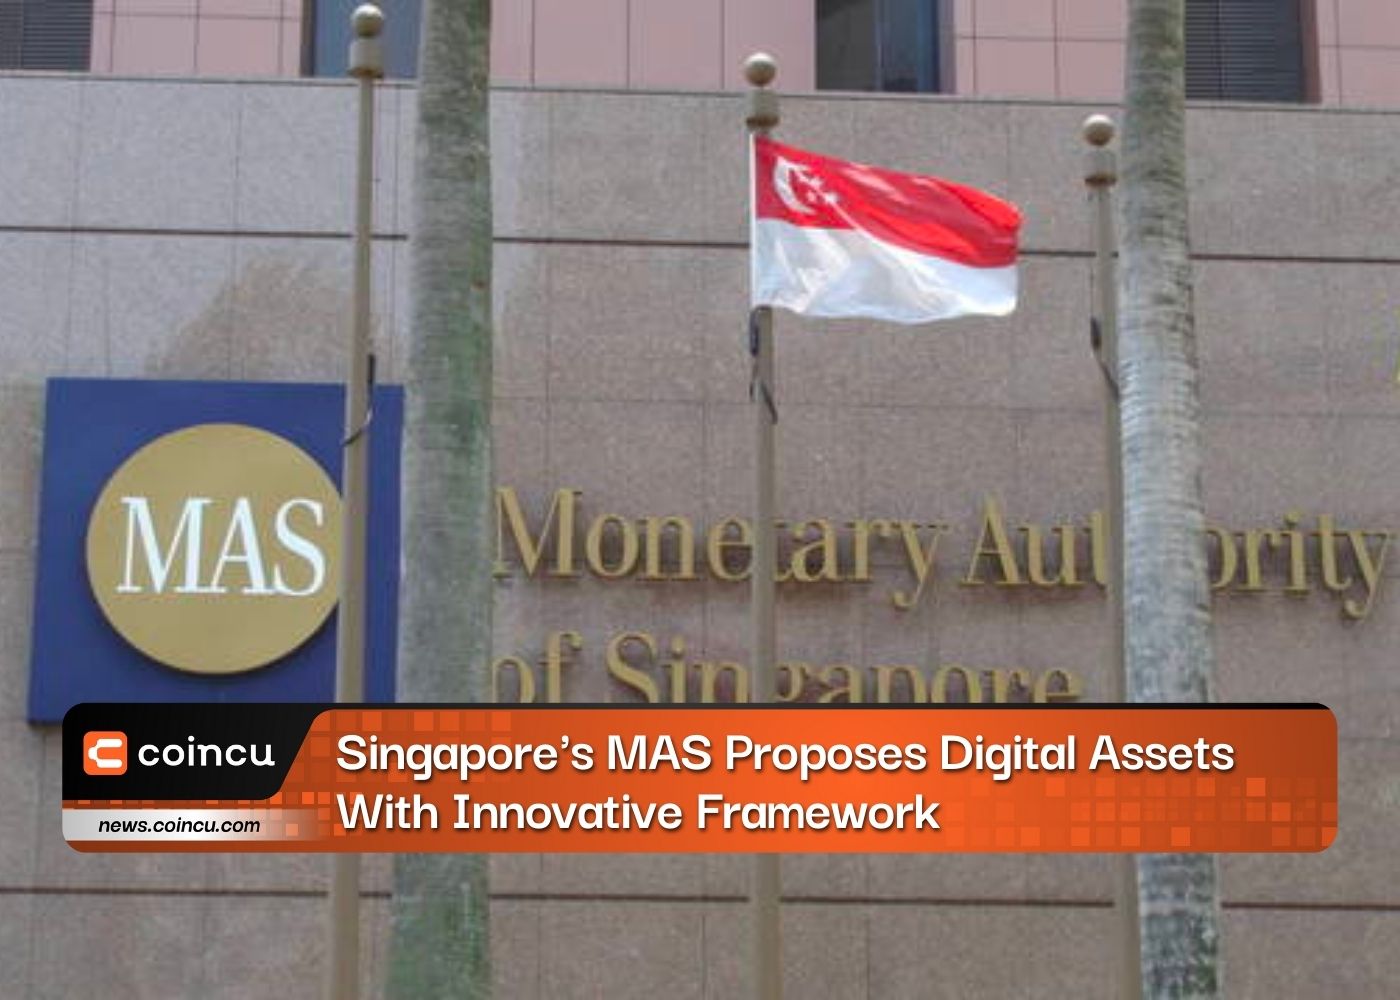 Singapore's MAS Proposes Digital Assets With Innovative Framework